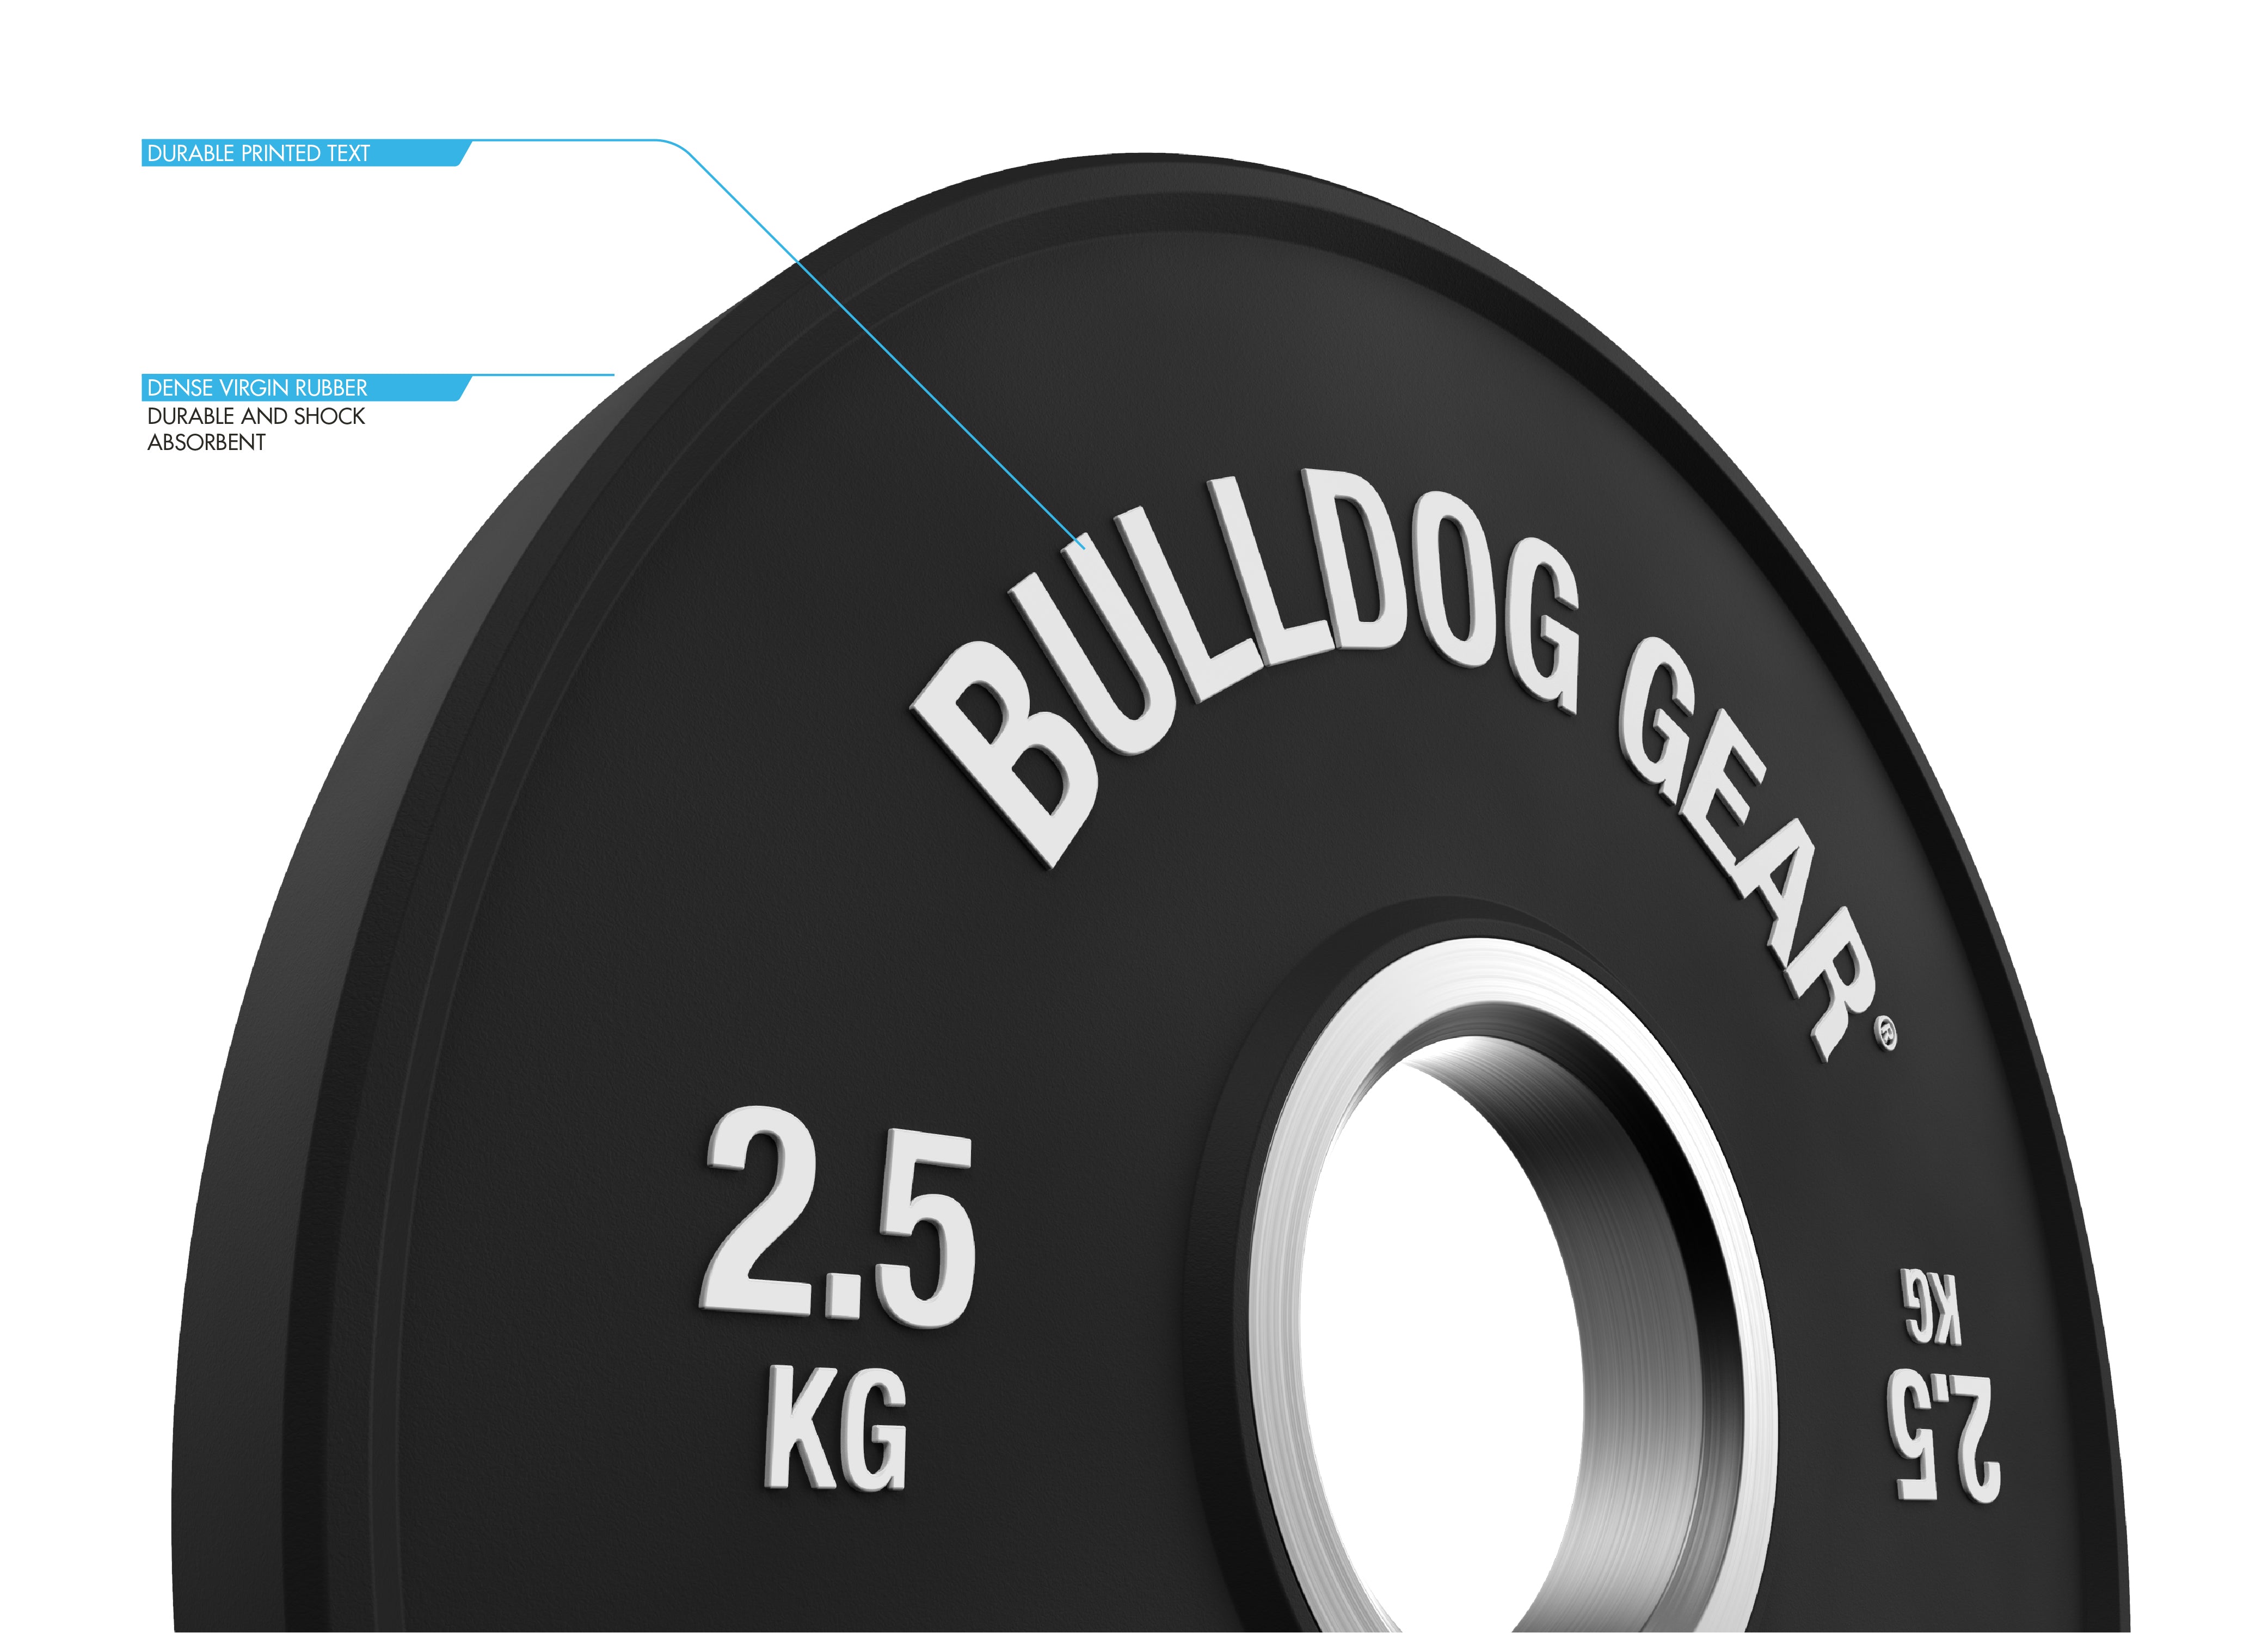 Bulldog Gear - Fractional Weight Change Plates 2.0 1.25kg/2.5kg